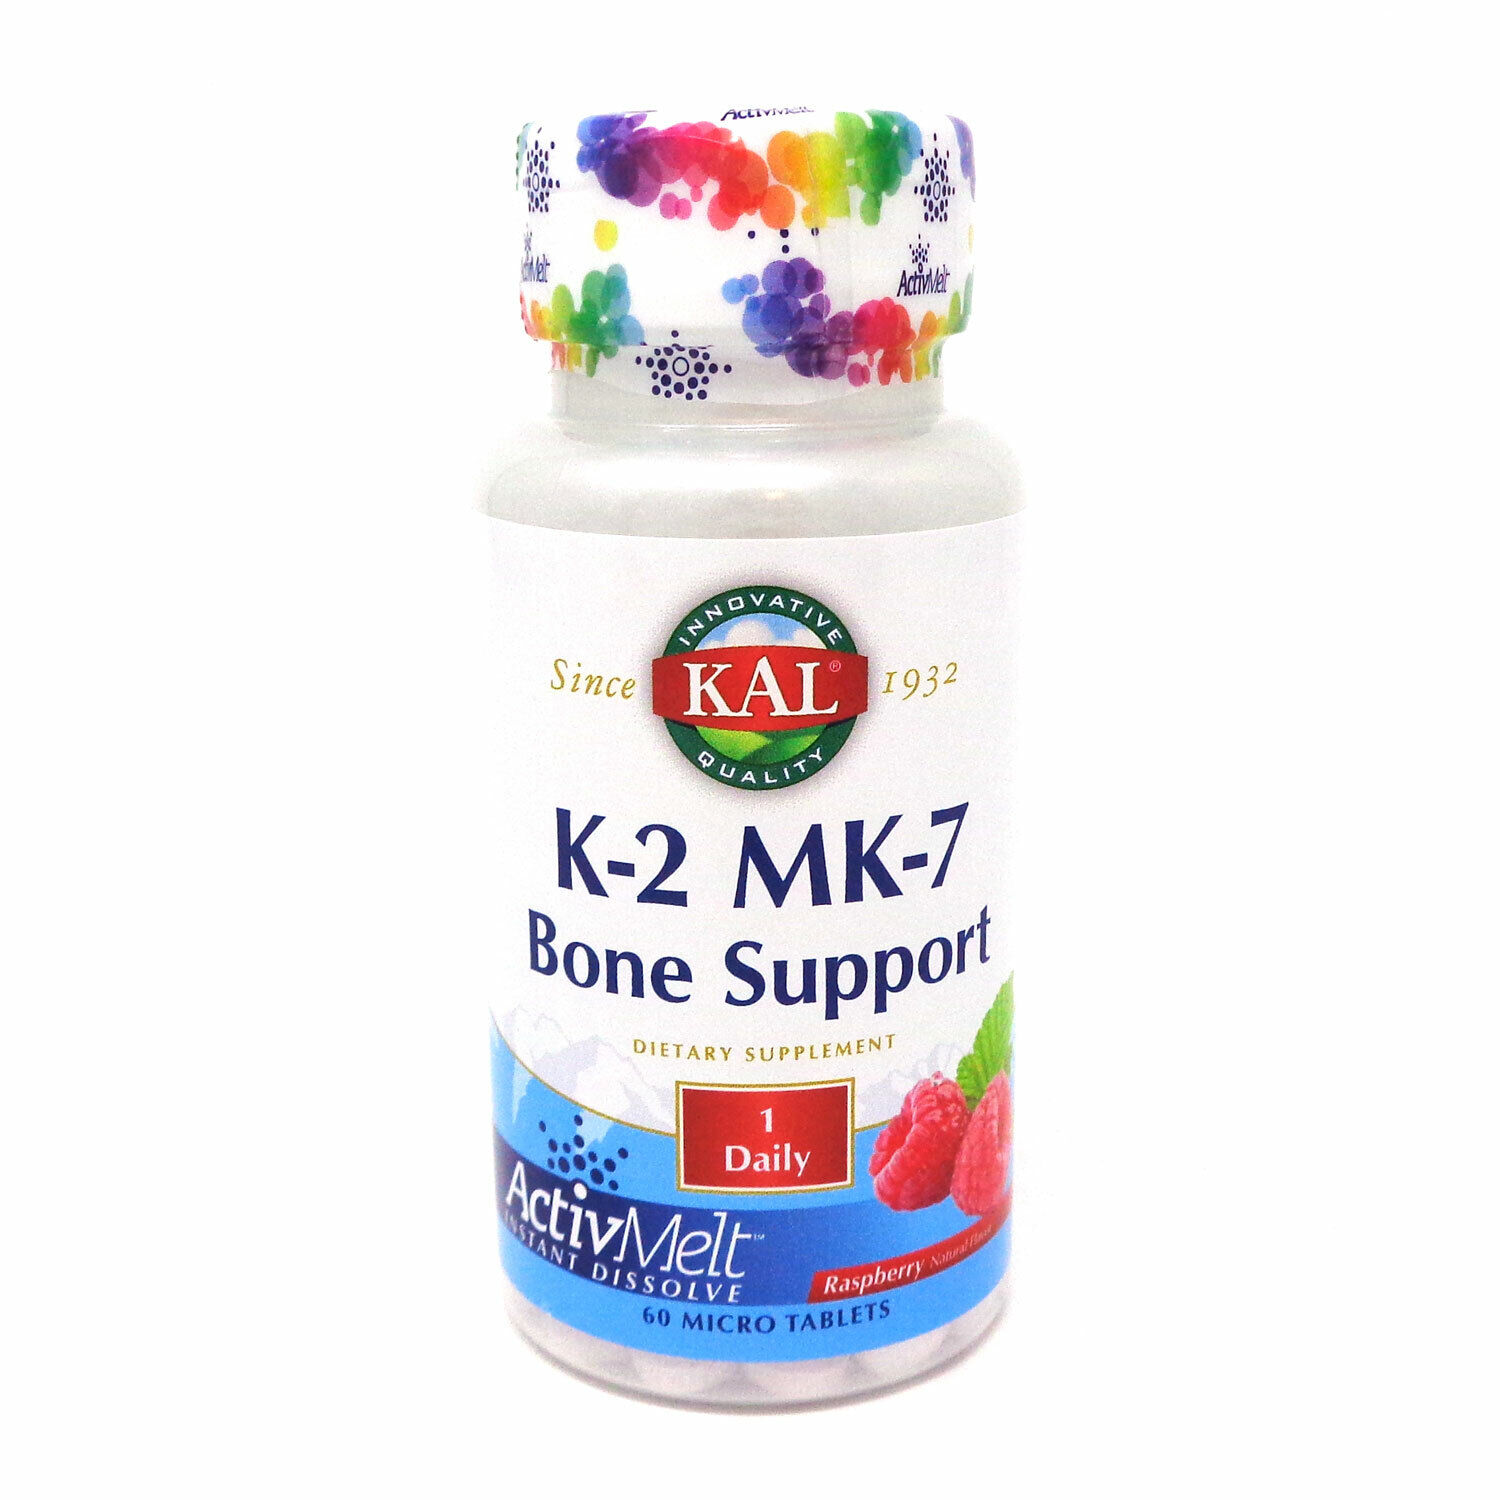 Kal K-2 MK-7 Bone Support - 60 Micro Tablets